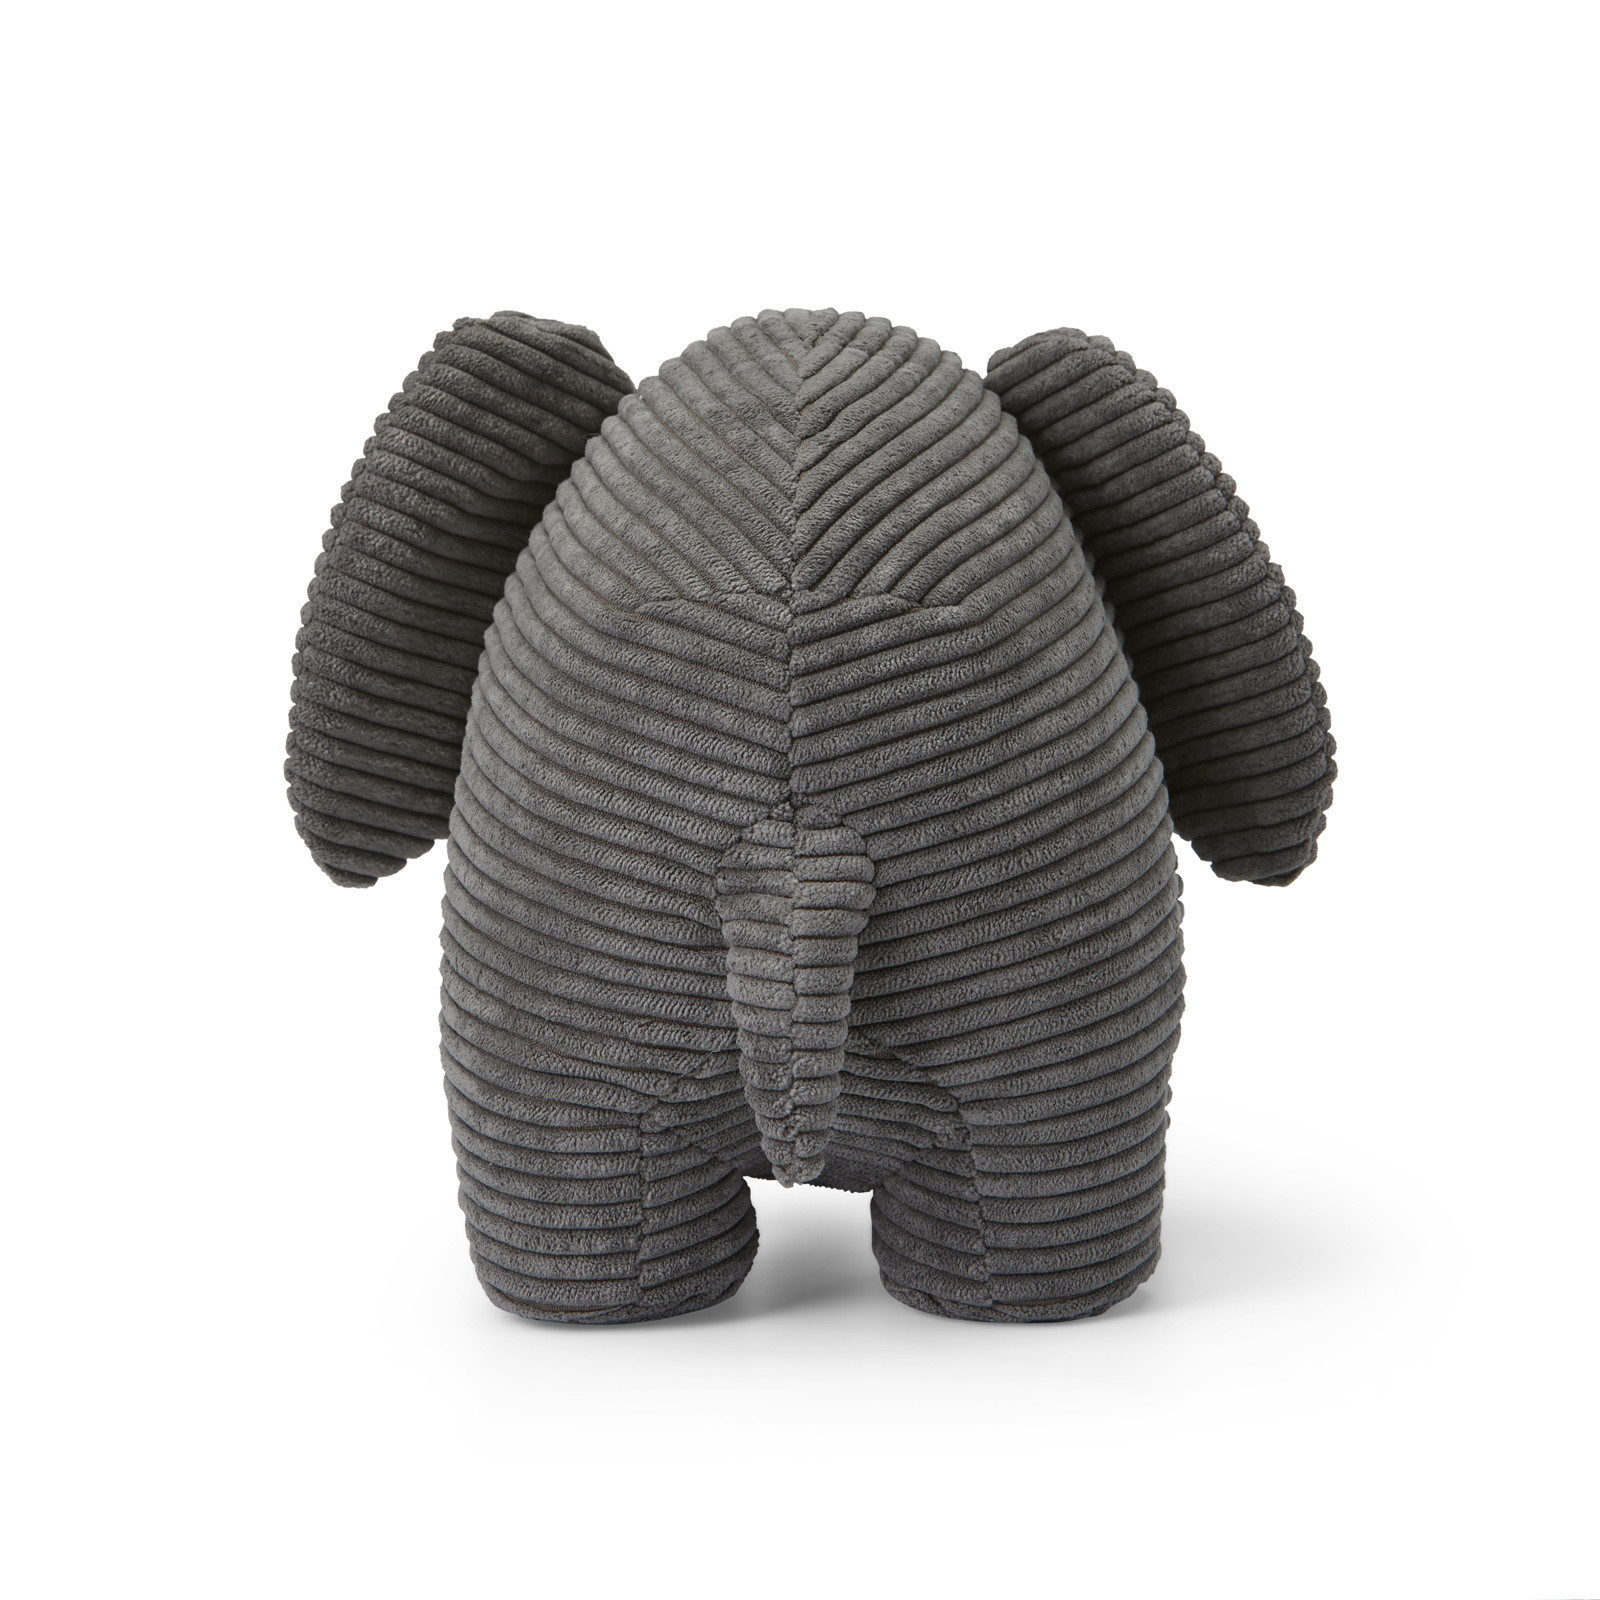 Elephant Corduroy Grey - 33 cm - 13''